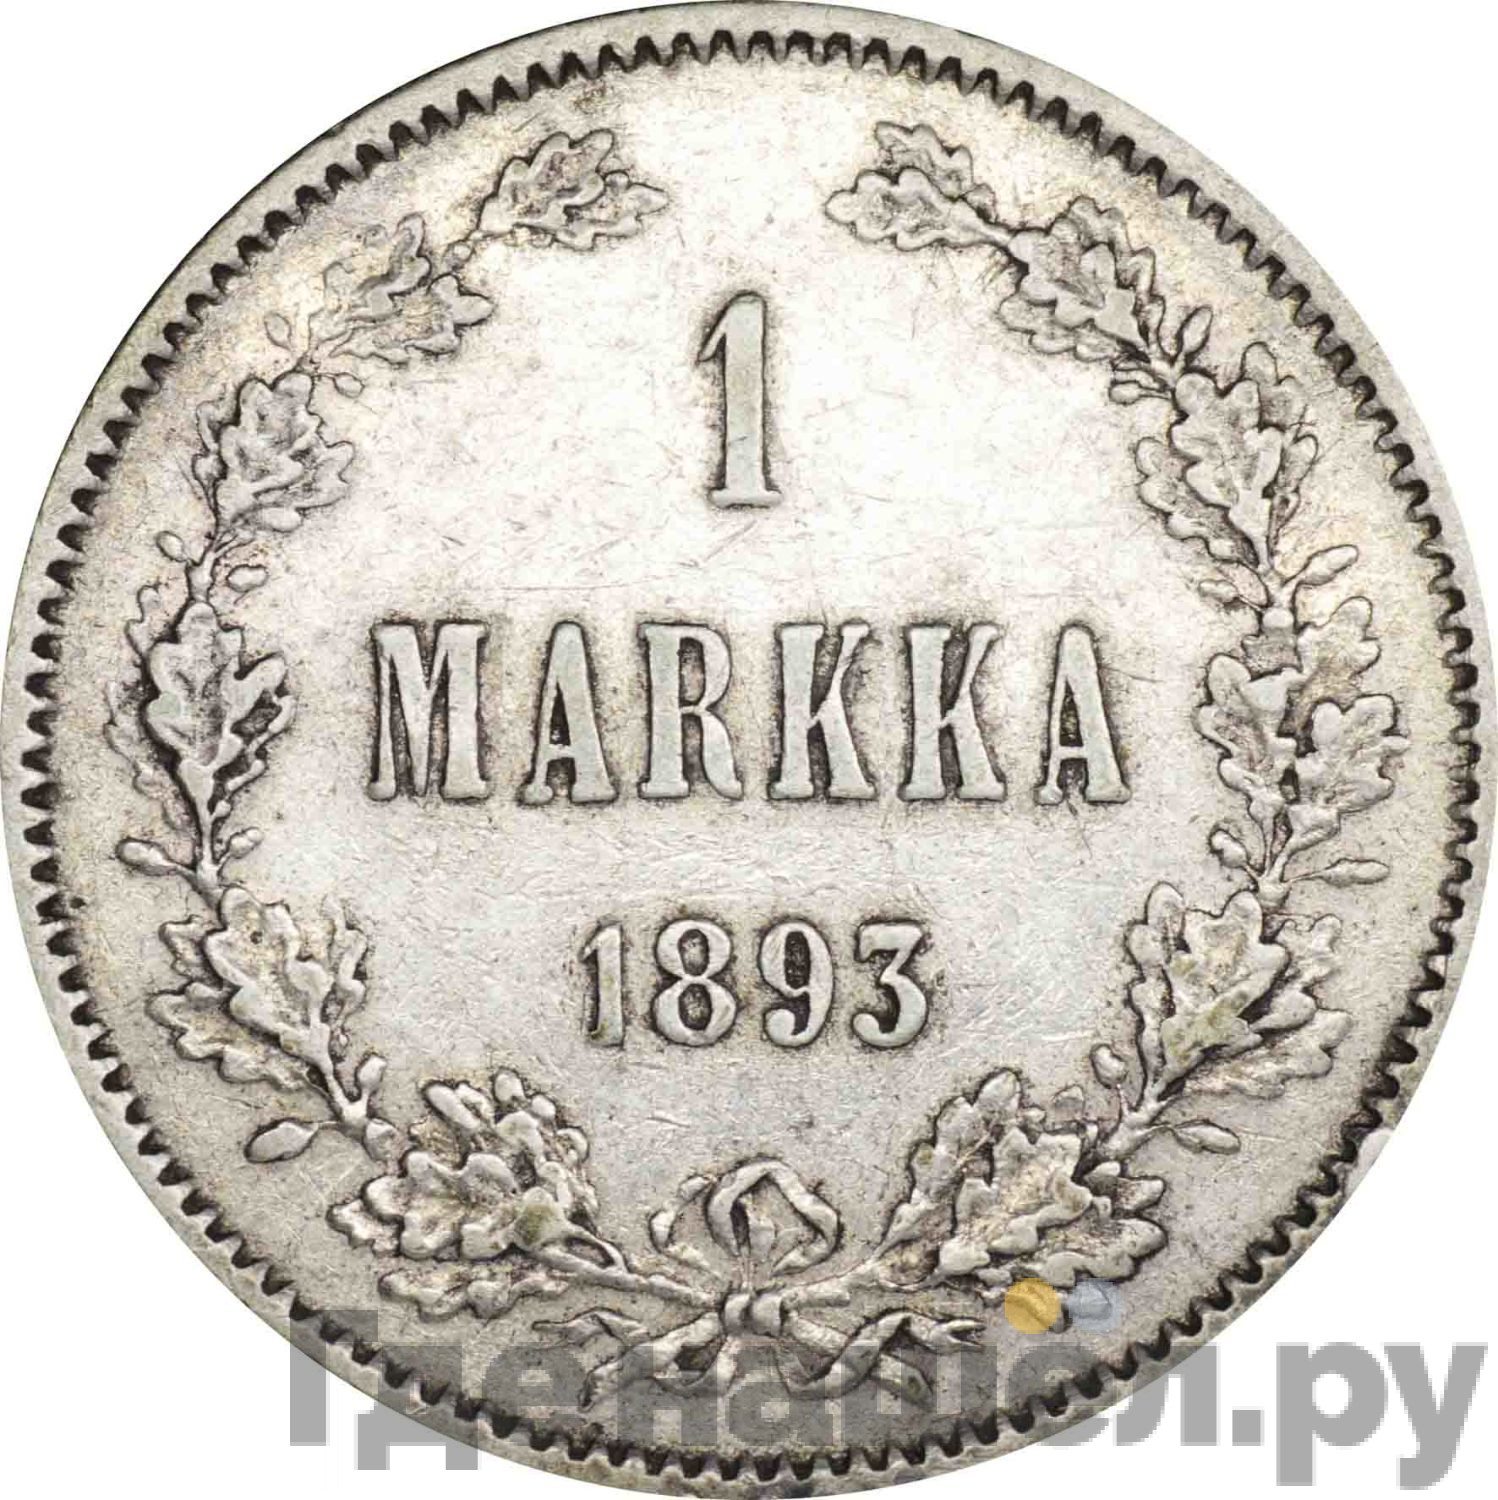 1 марка 1893 года L Для Финляндии